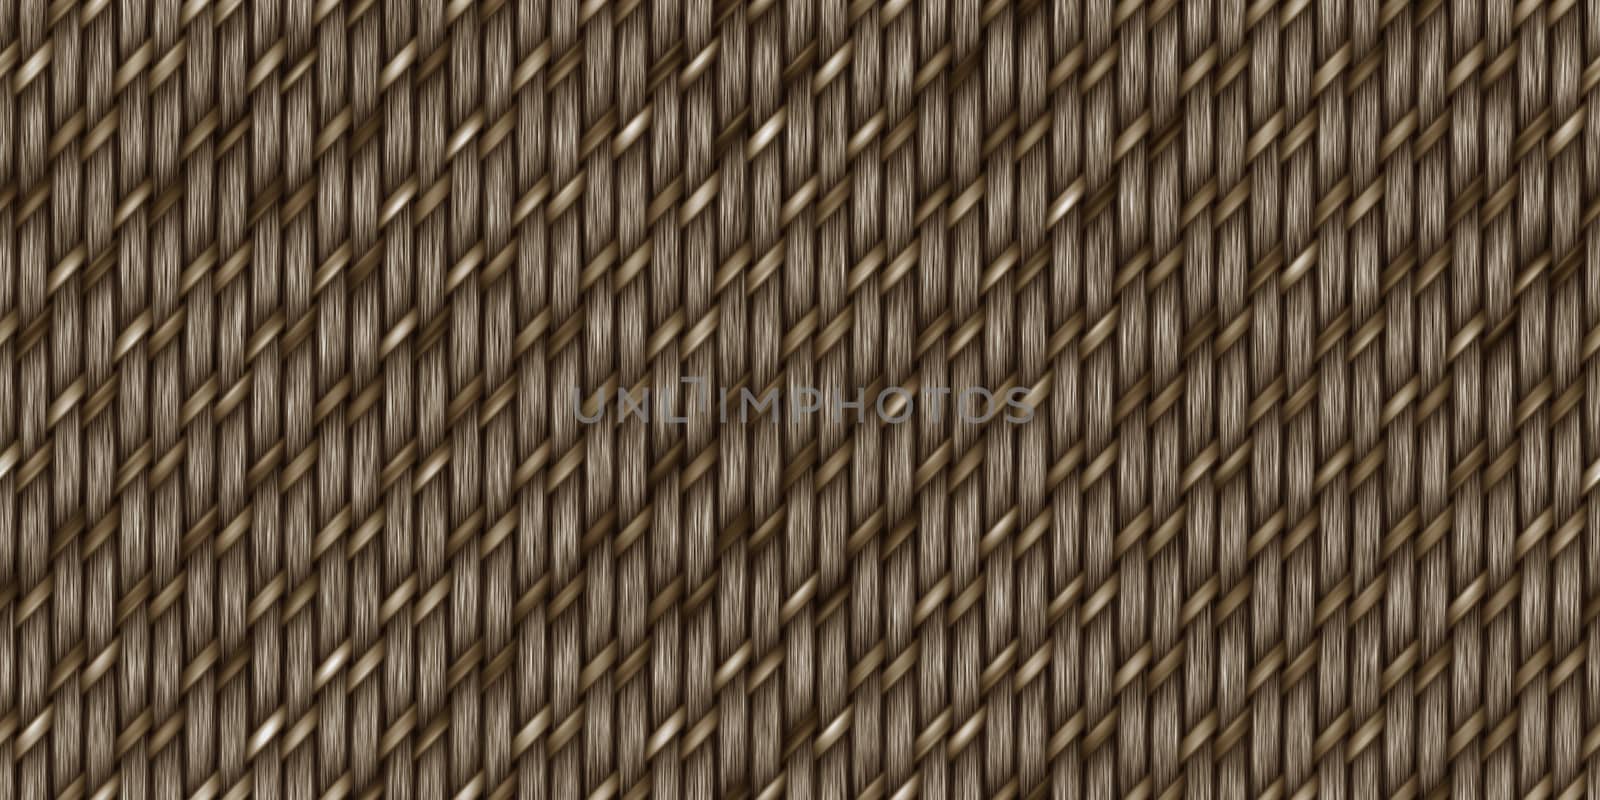 Brown Cross Weave Texture. Wicker Rattan Background Surface. 3D Rendering. 3D Illustration.